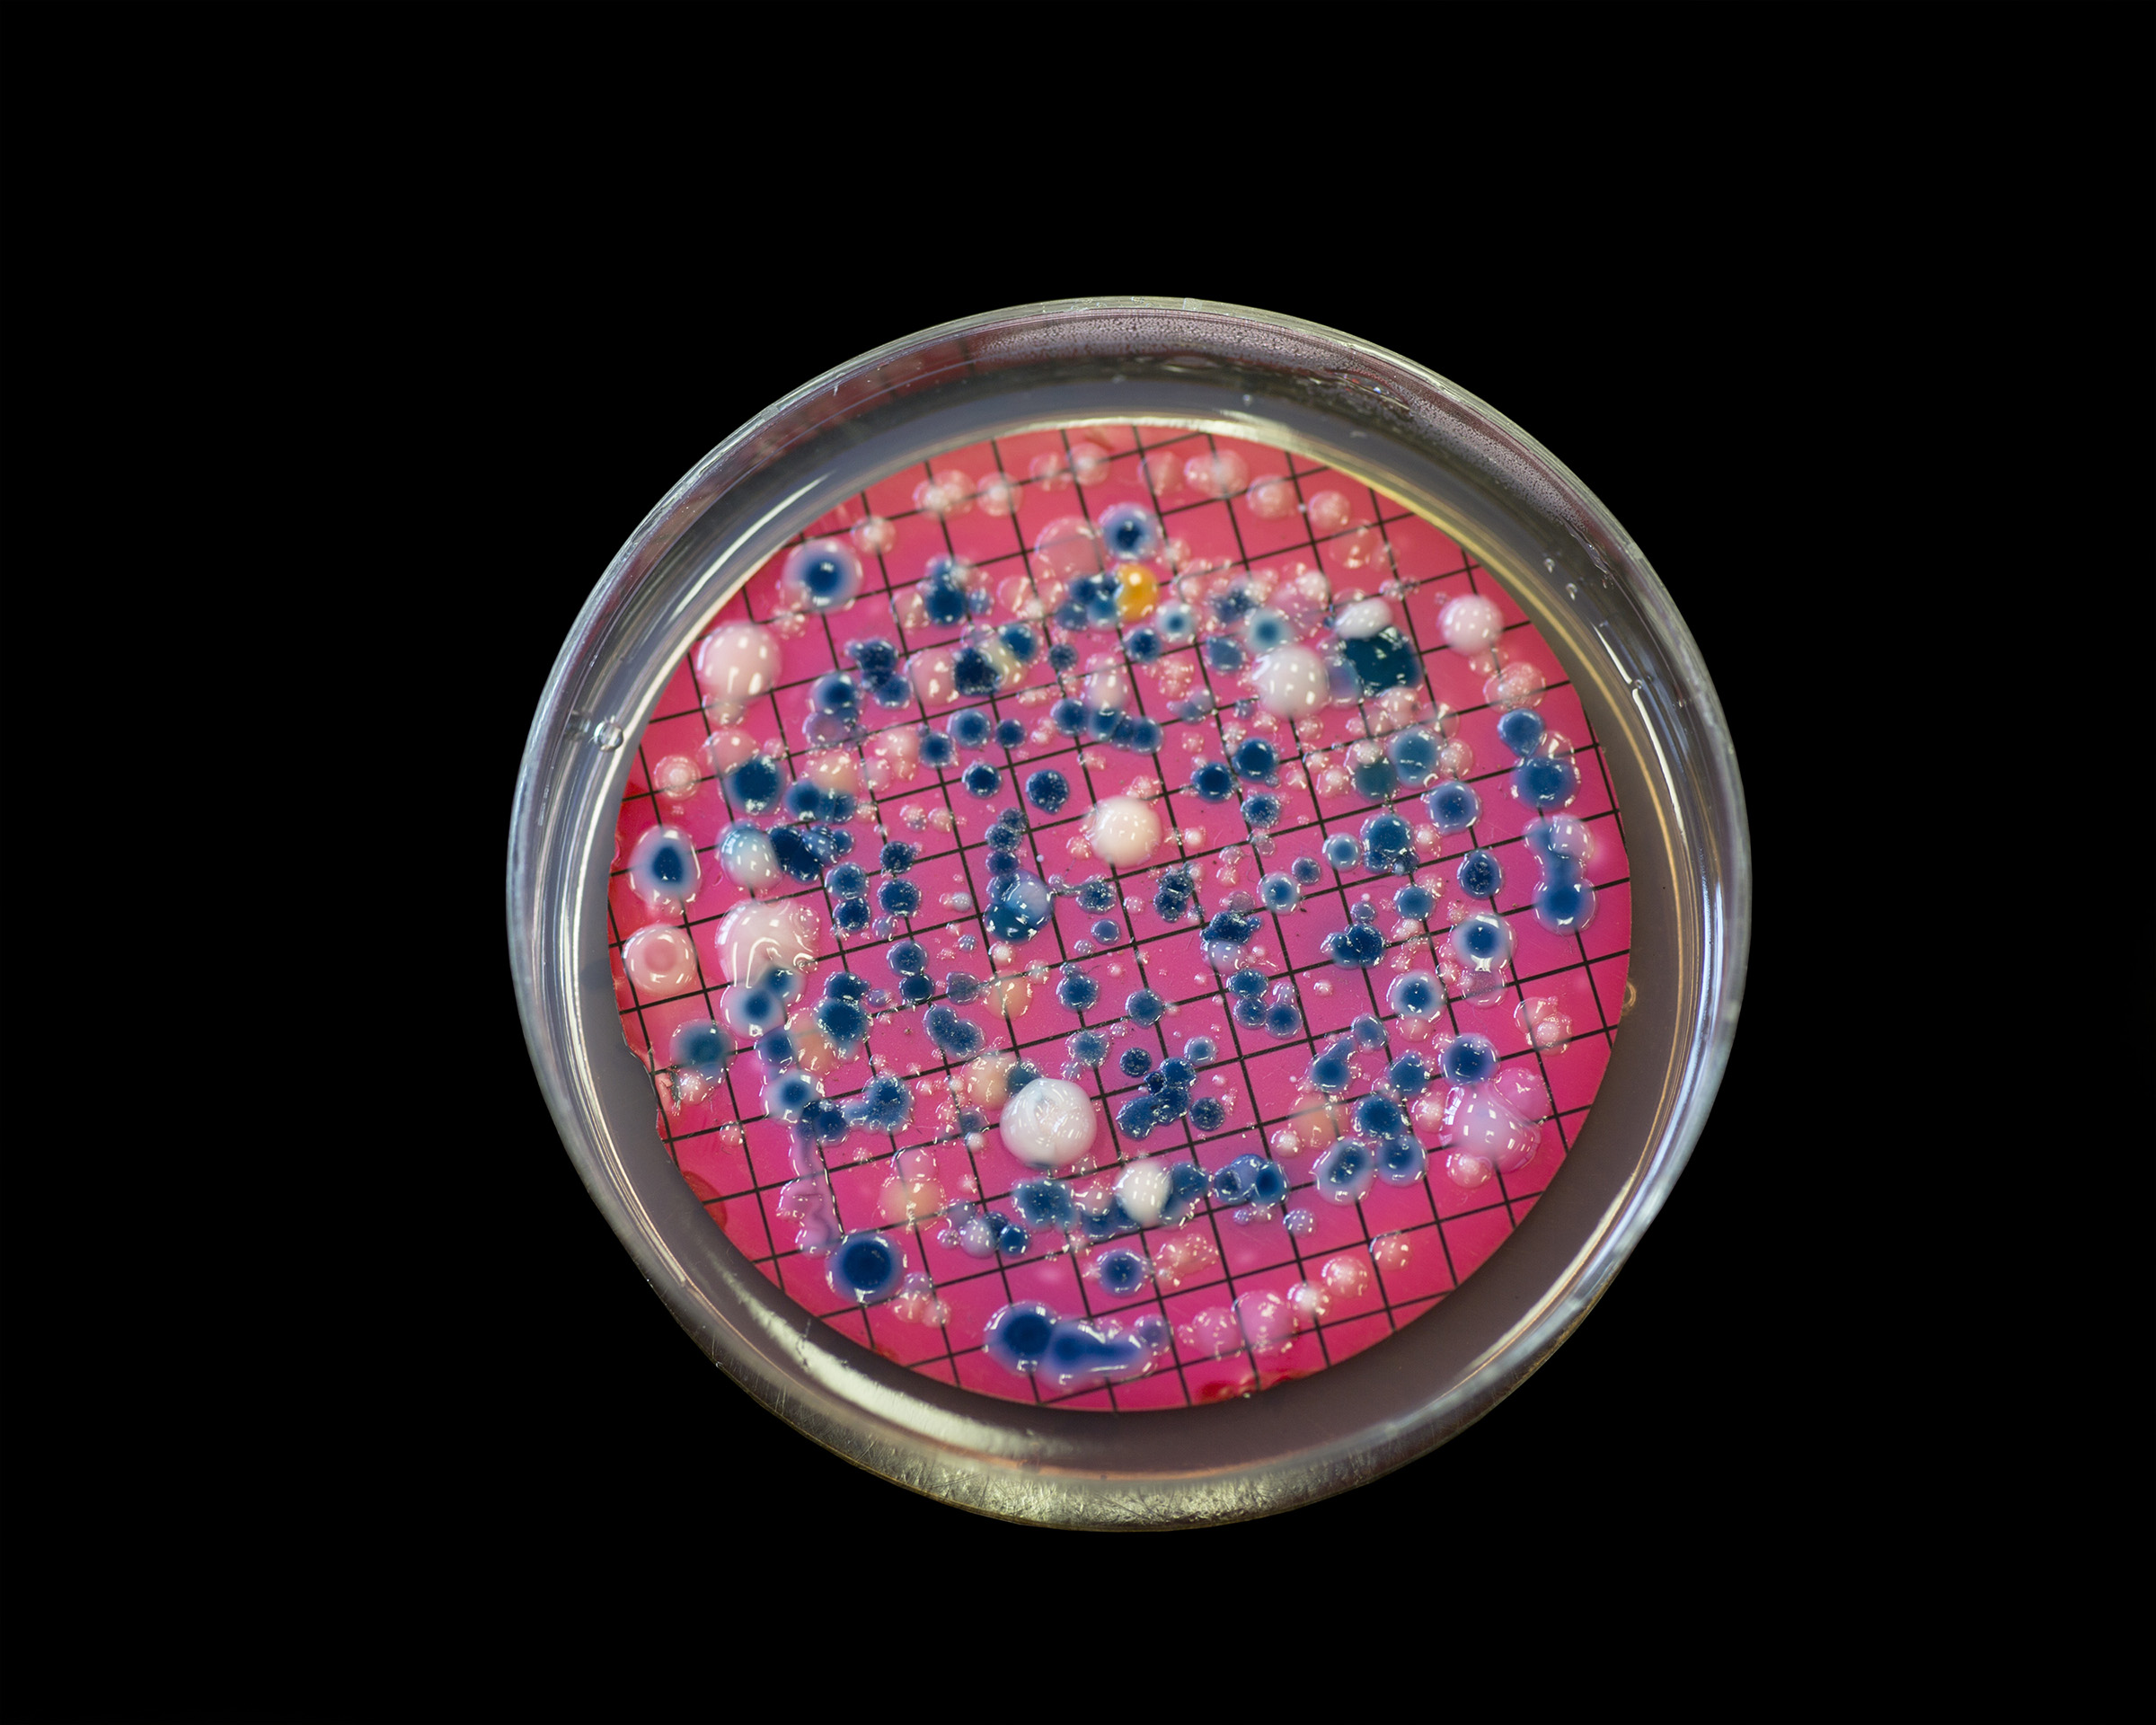 Escherichia coli colonies photo